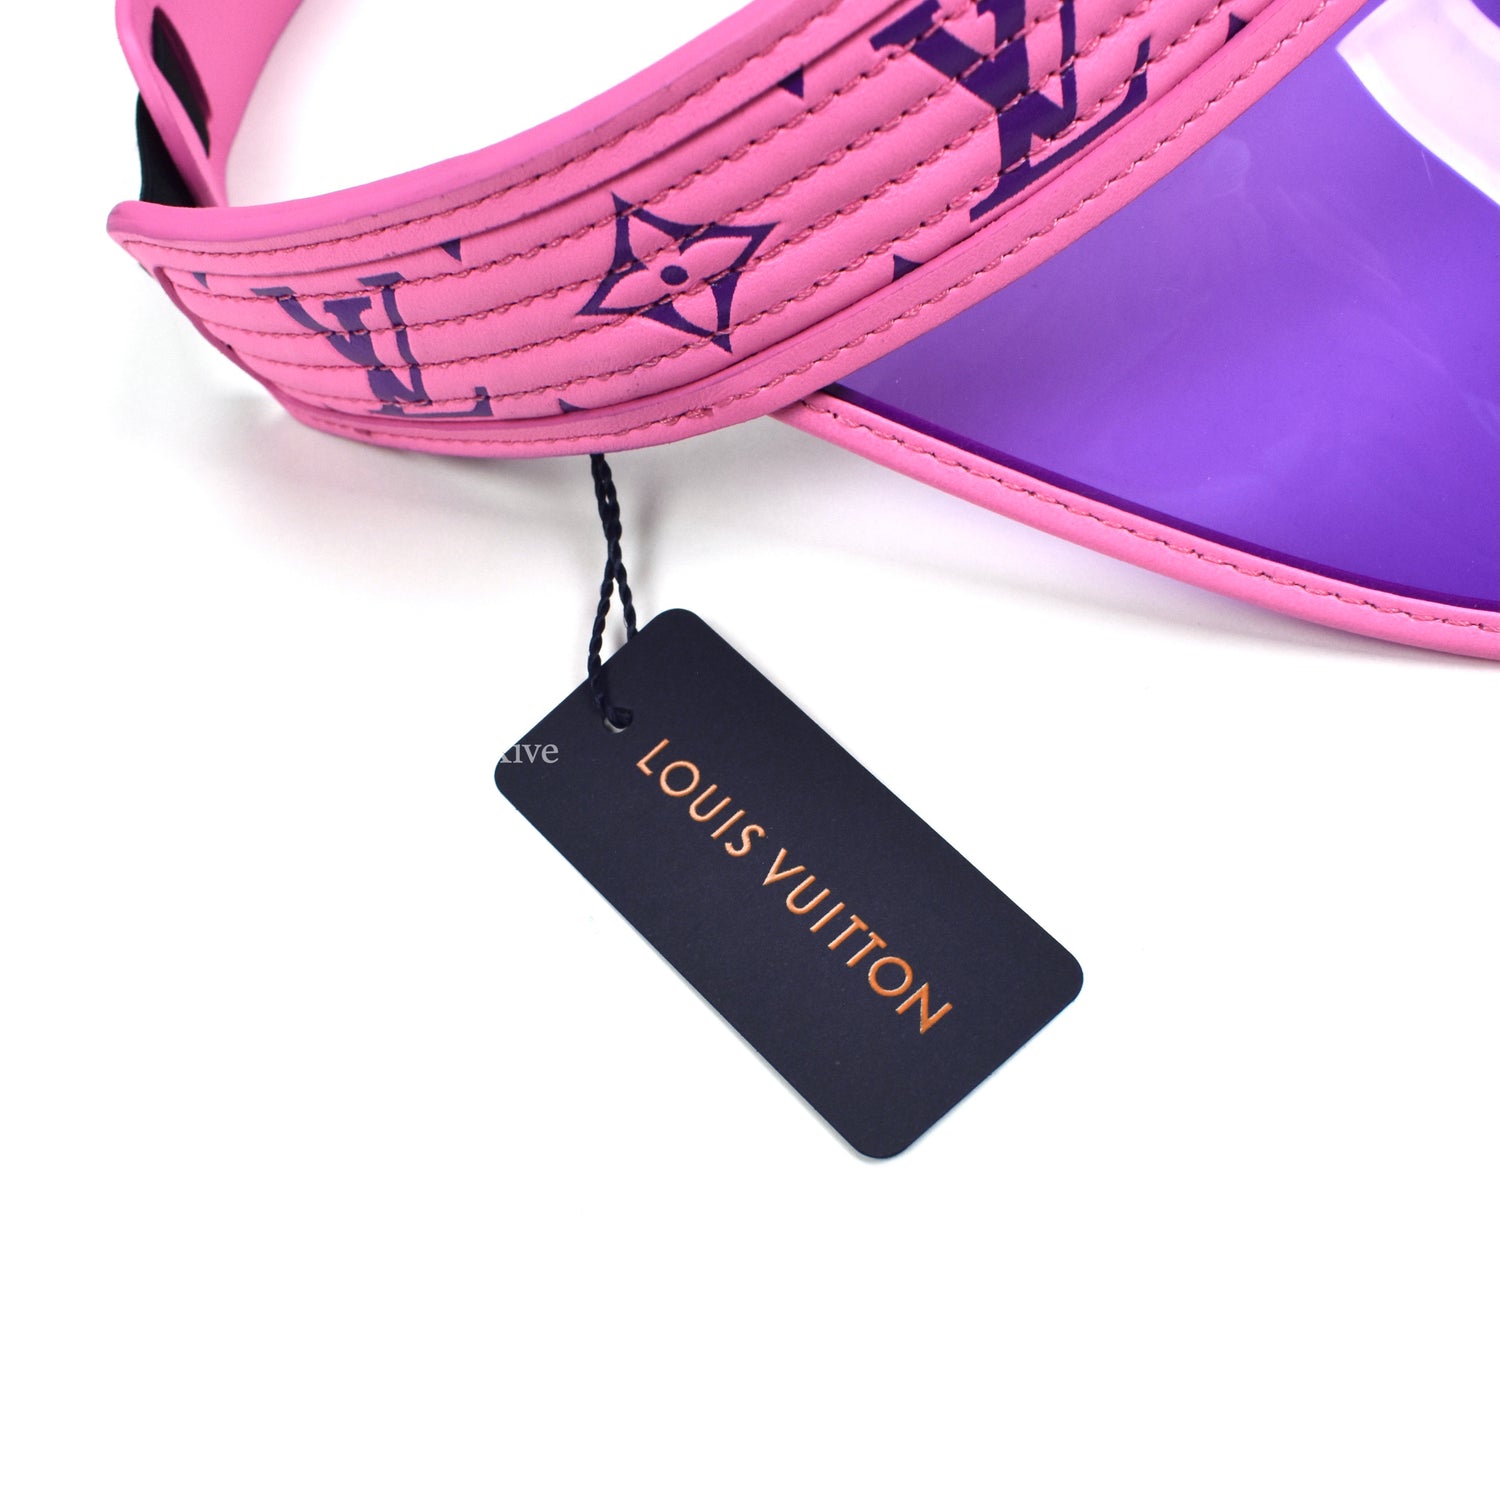 Louis Vuitton Monogram Vuittamins Visor, Pink, One Size